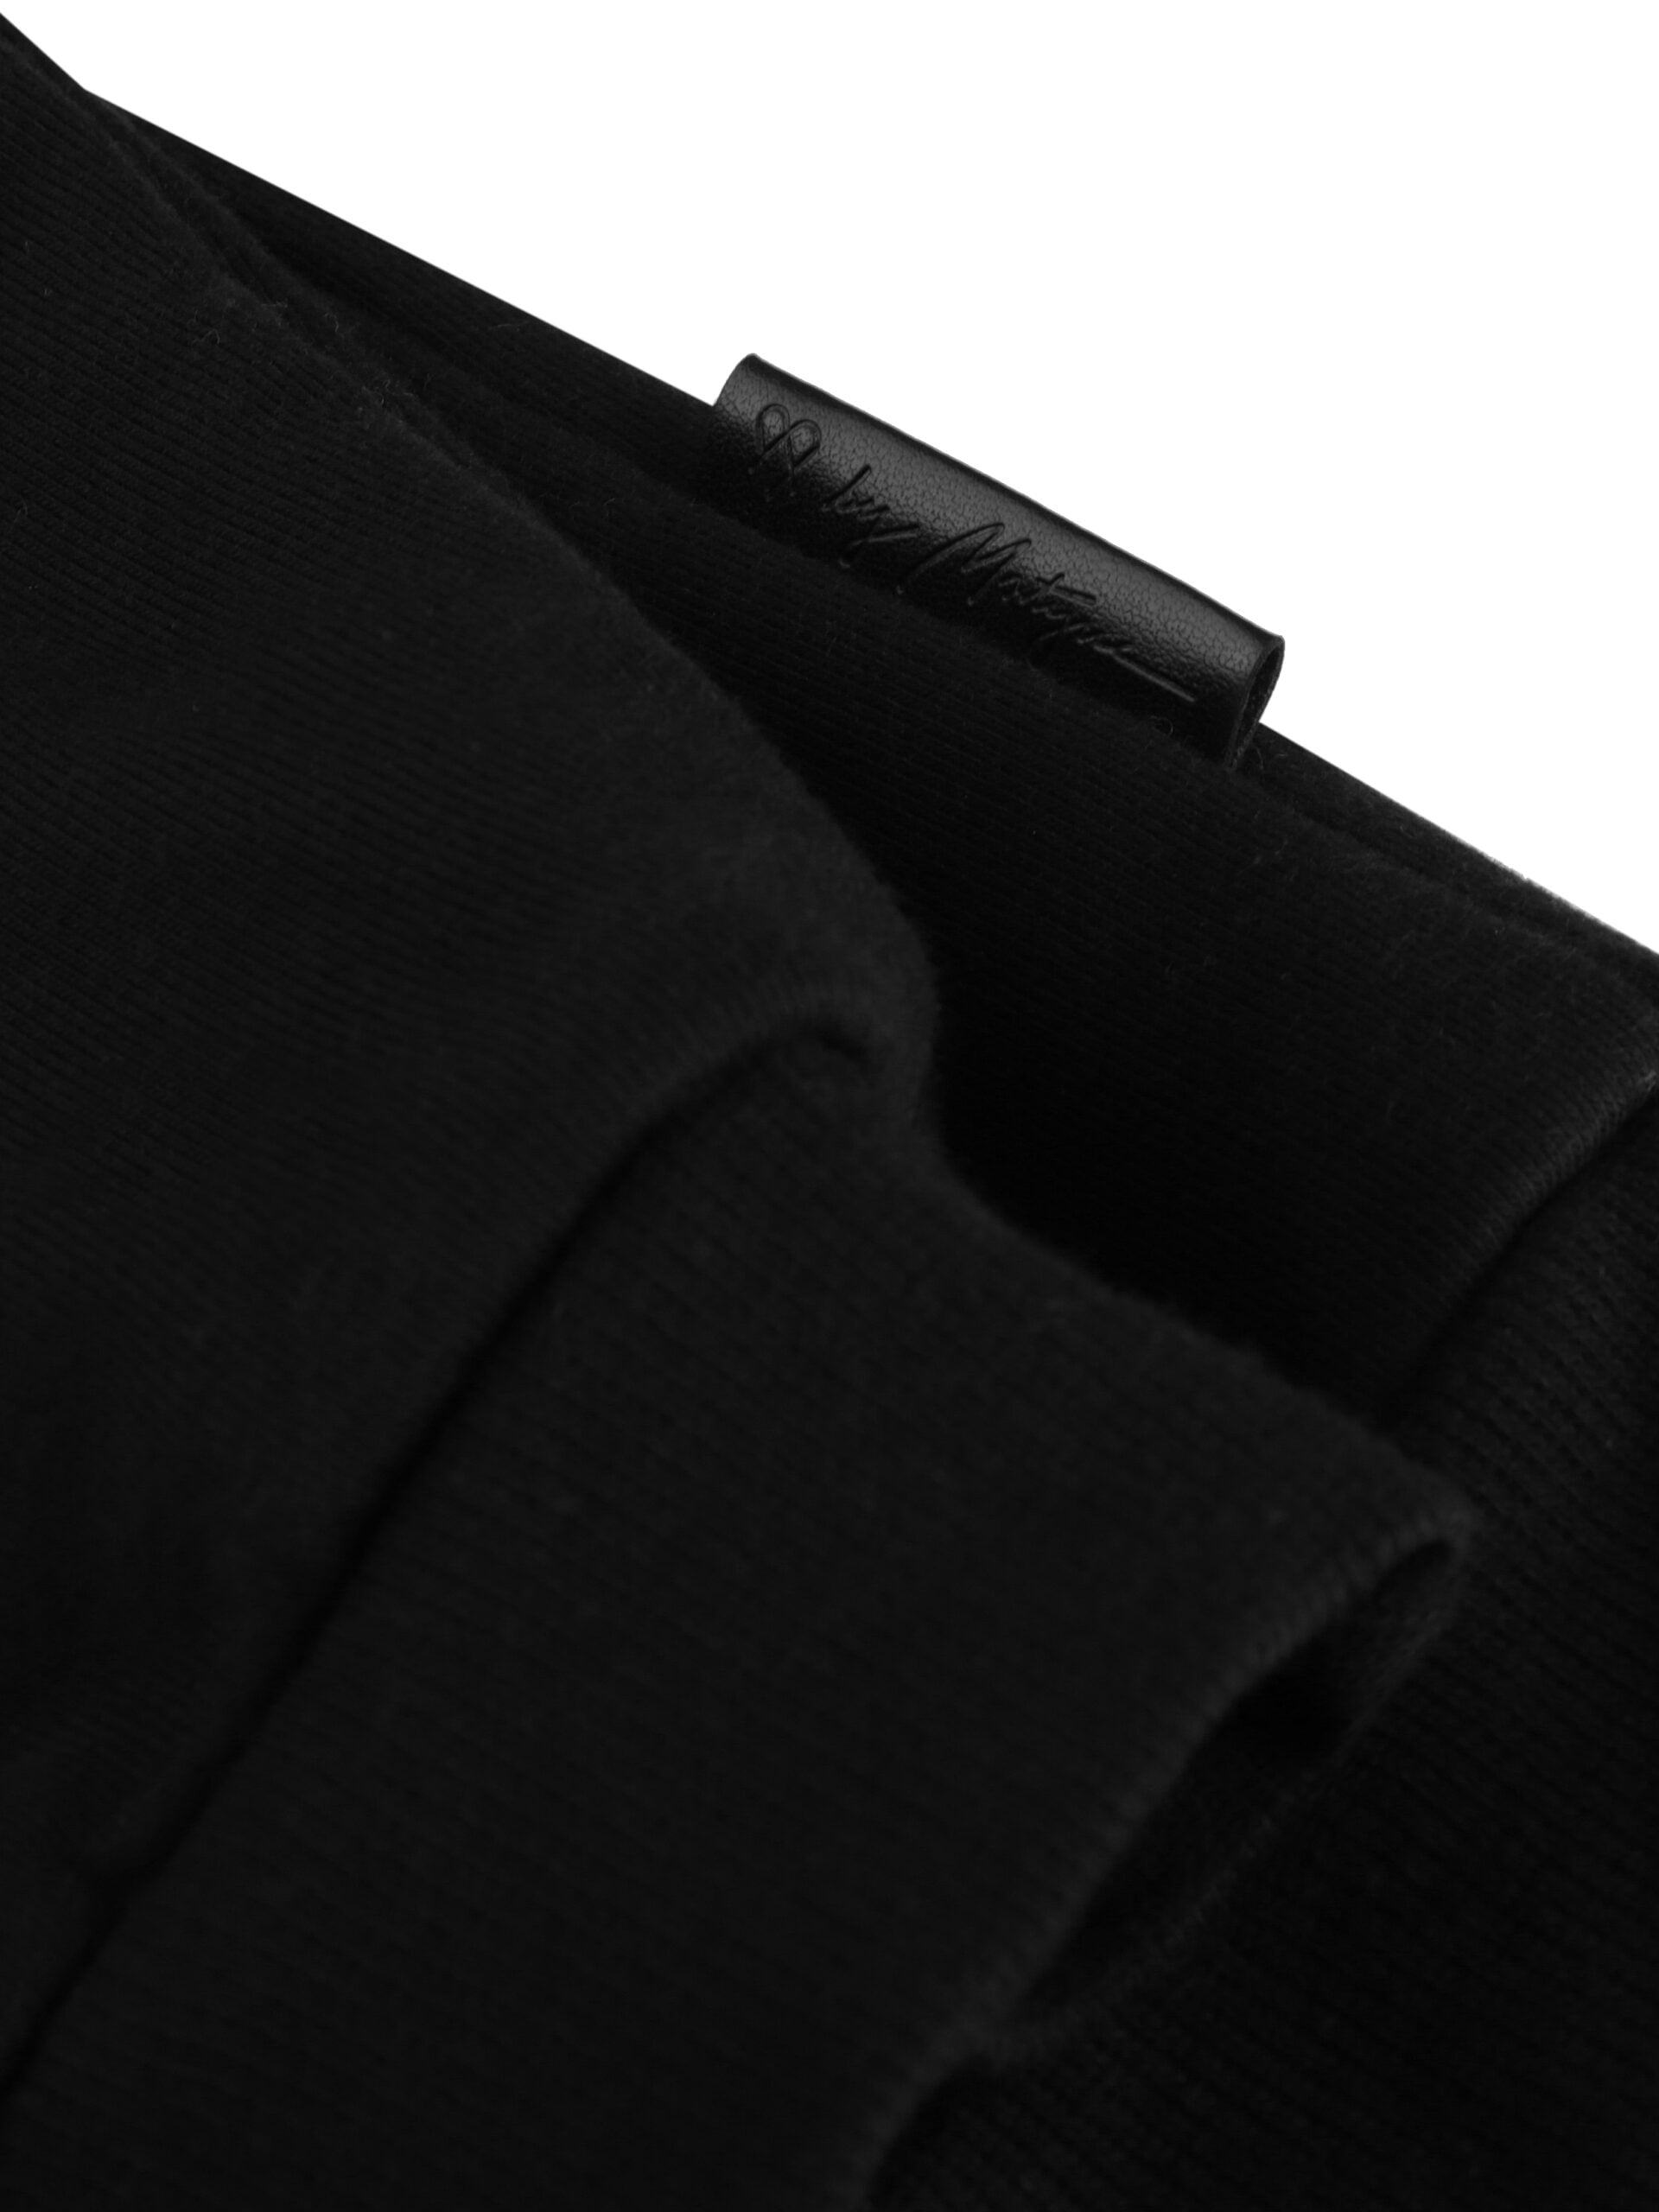 Bluza Slim Fit Cozy Up Black Detal2 329